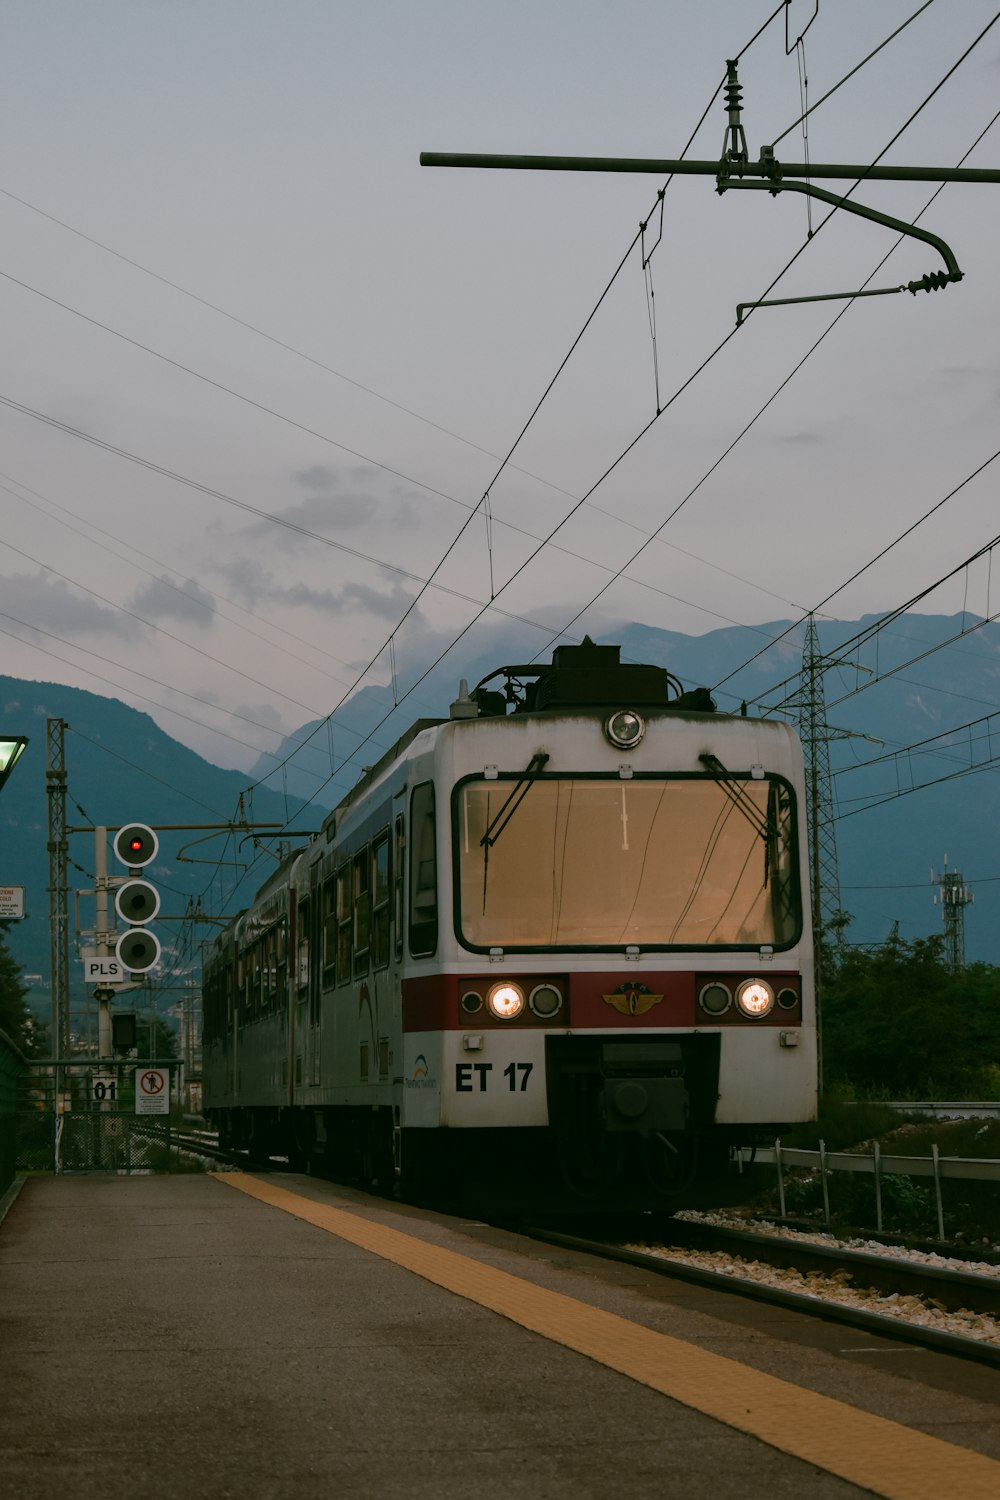 white and black train on rail tracks under blue sky during daytime